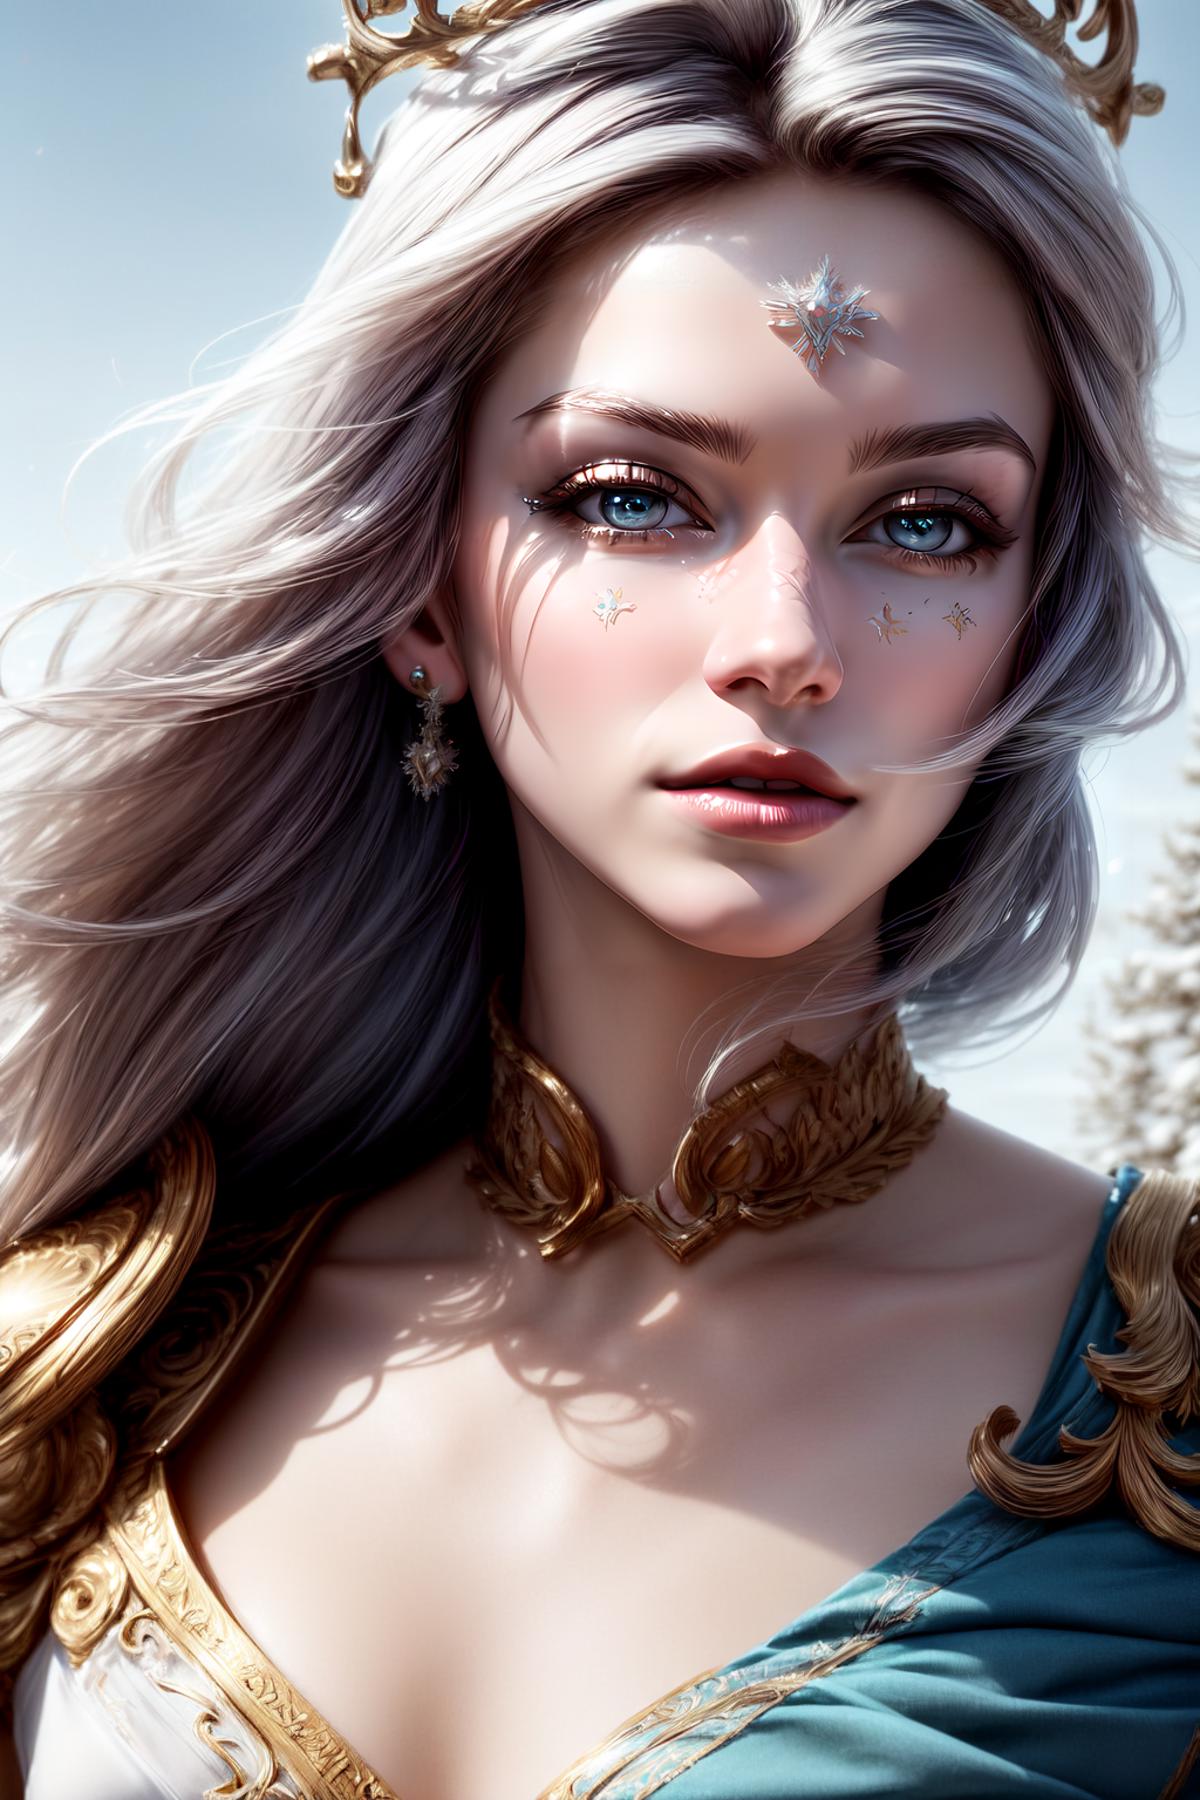 Winterblessed Diana | League of Legends image by PettankoPaizuri